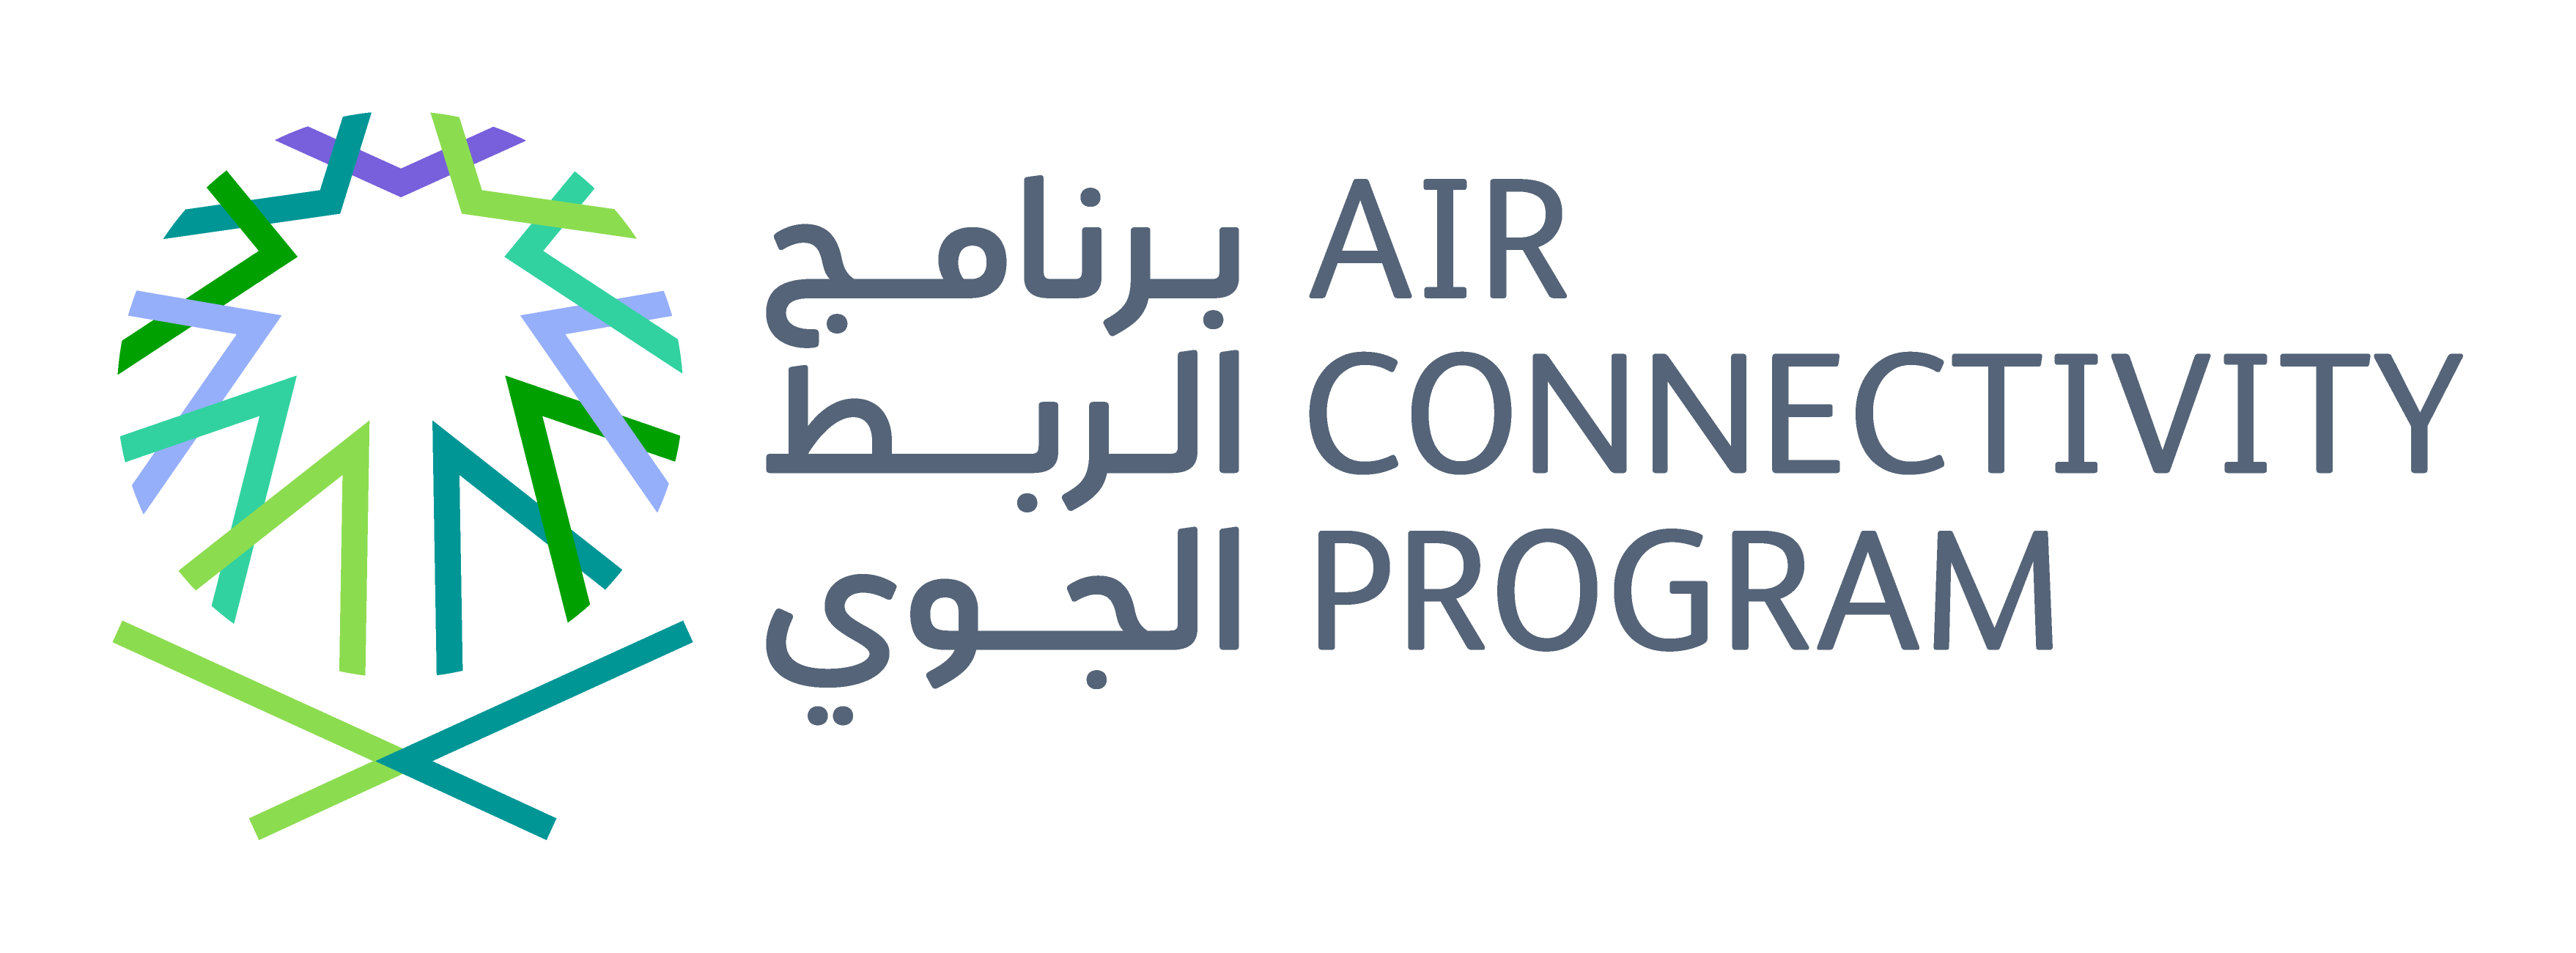 Air Connectivity Program logo